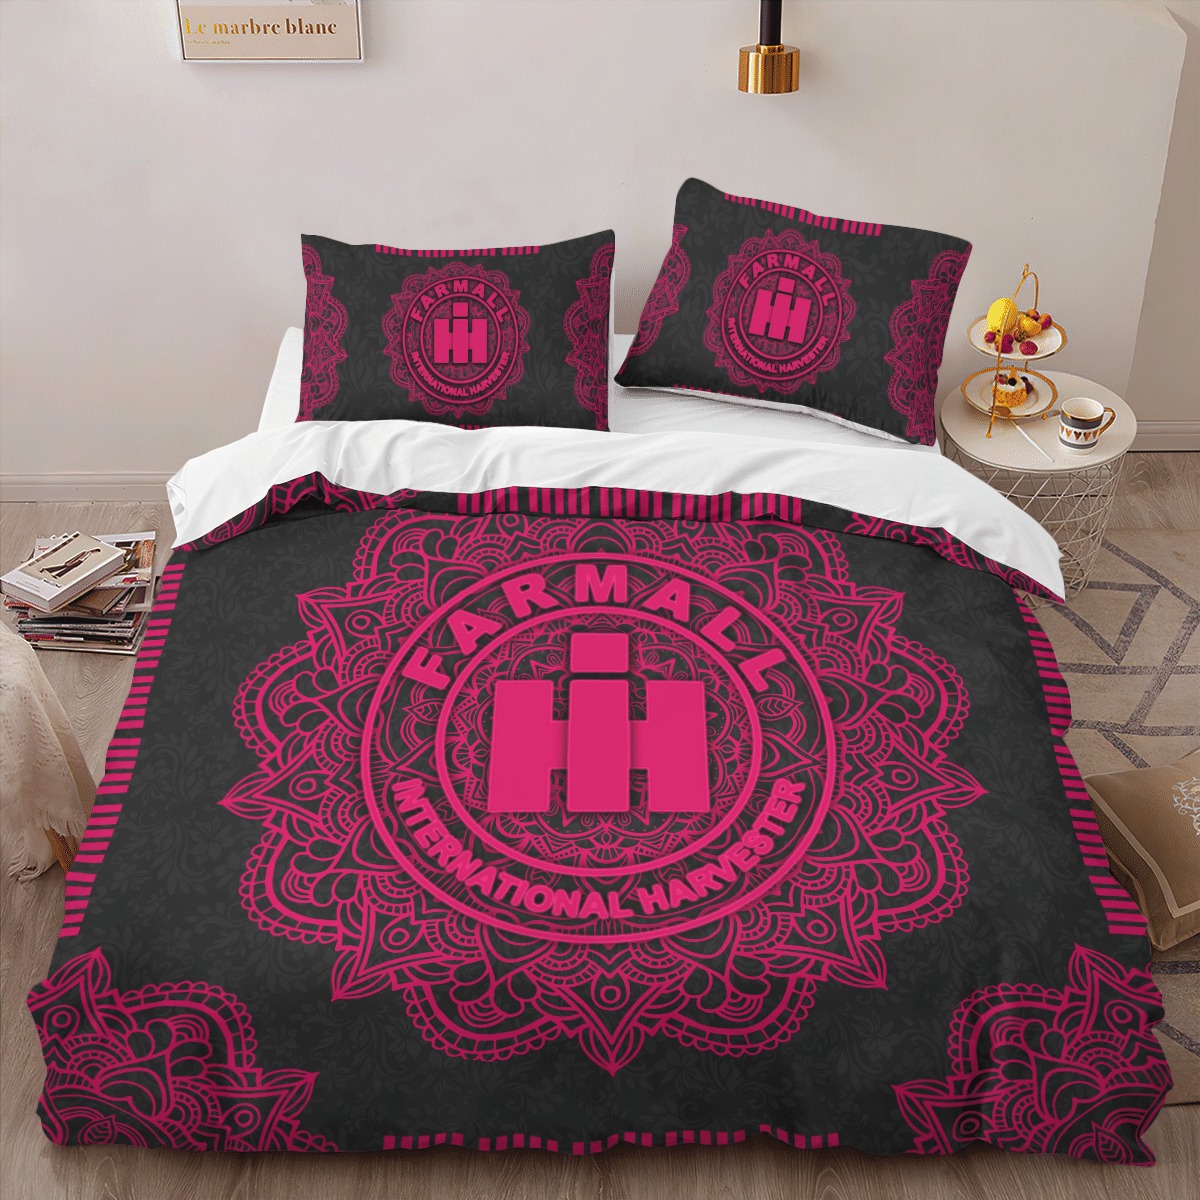 Farmall International Harvester IH Mandala quilt bedding set – LIMITED EDITION